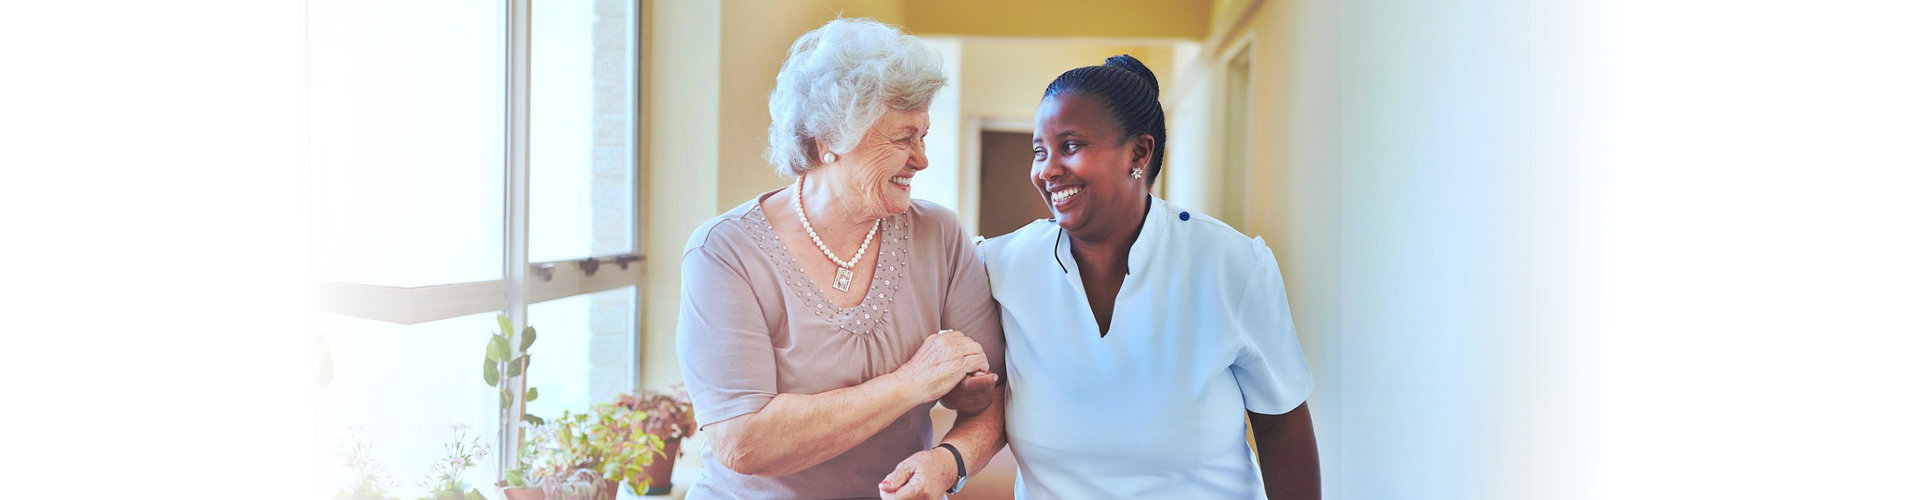 senior woman ang caregiver smiling